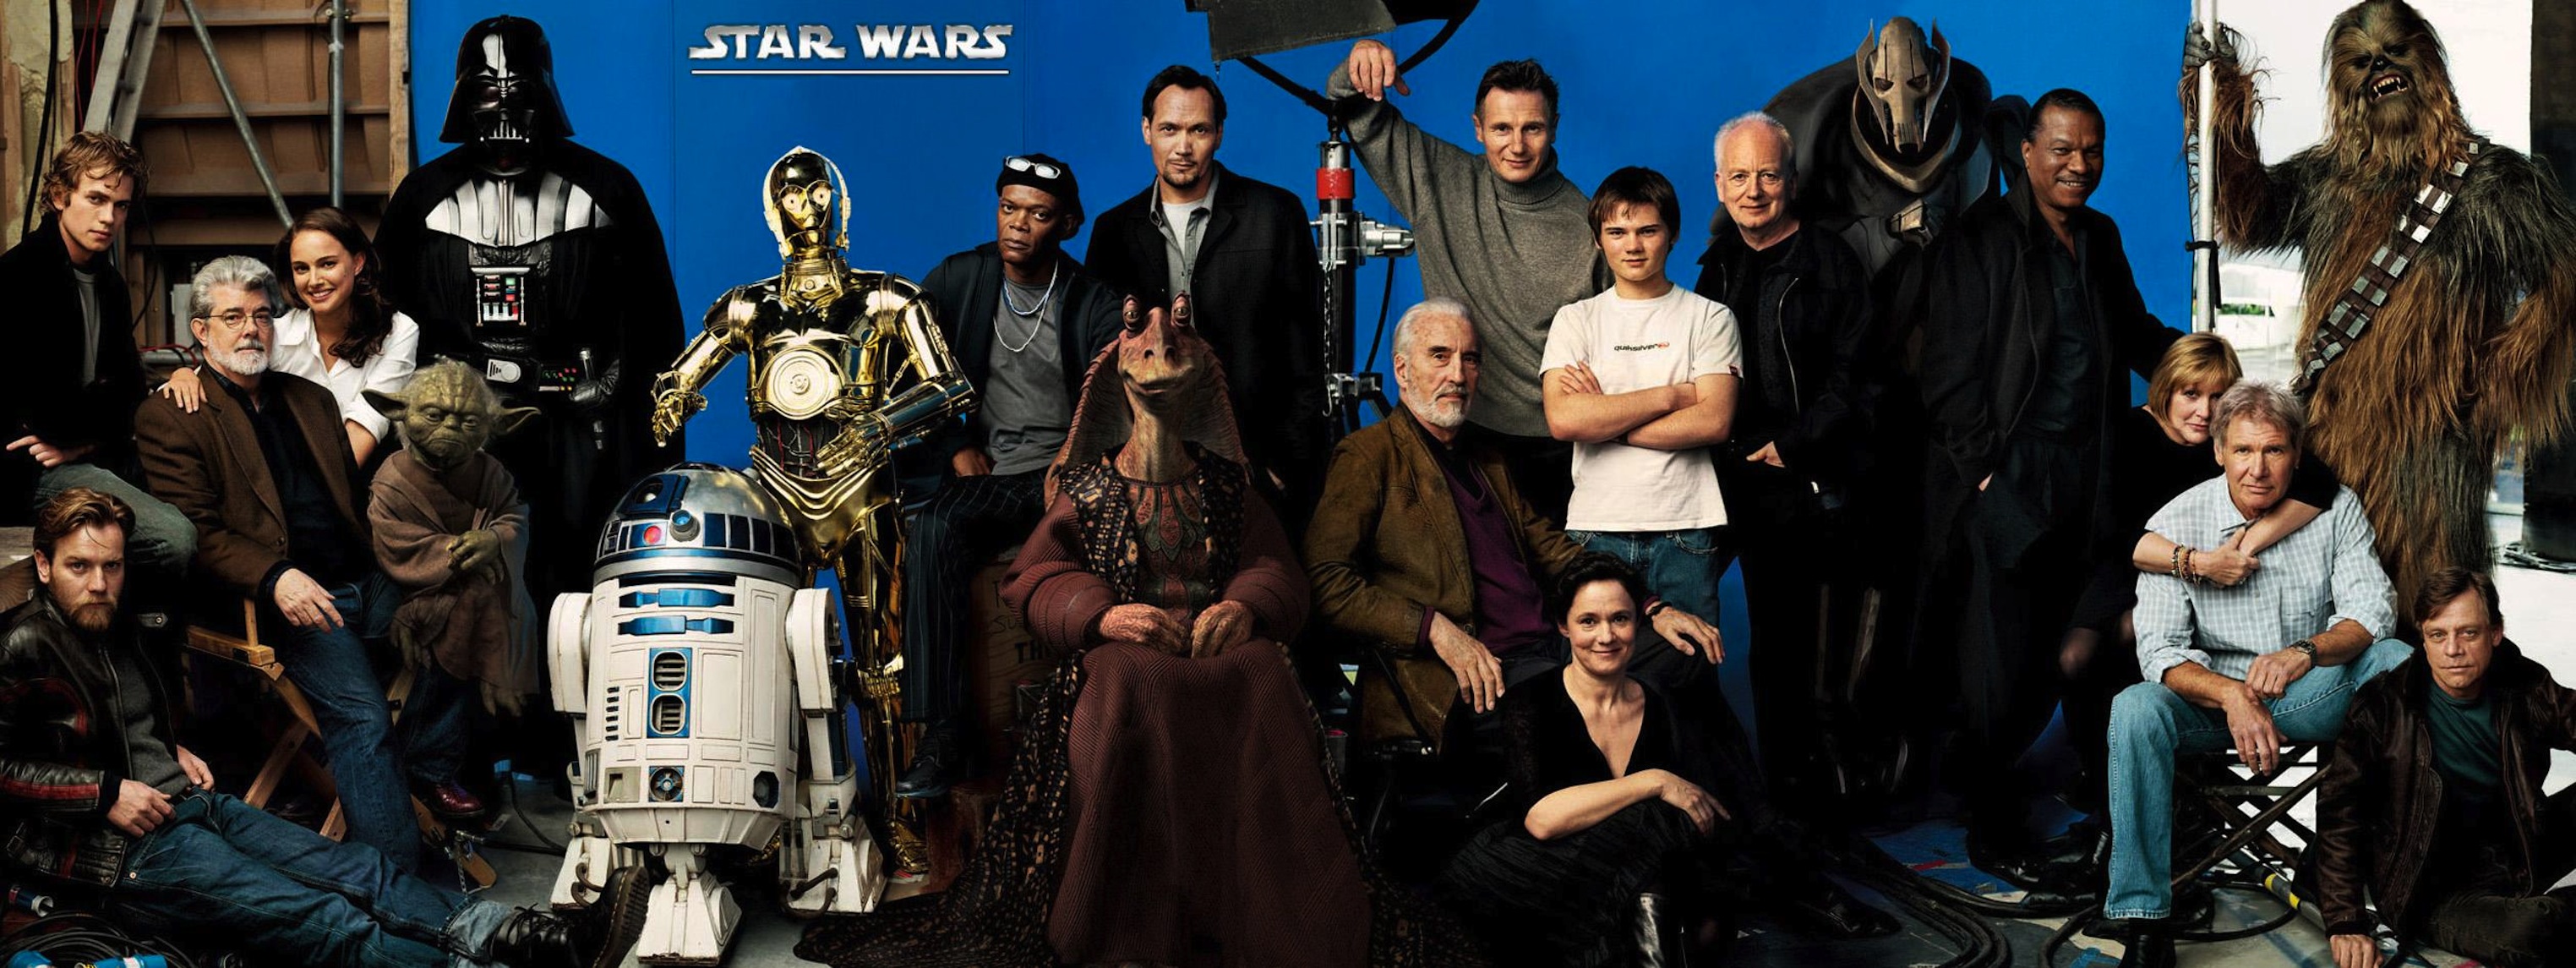 George Lucas C 3PO Jar Jar Binks Harrison Ford R2 D2 Chewbacca Darth Vader Cast Yoda General Grievou 3048x1145